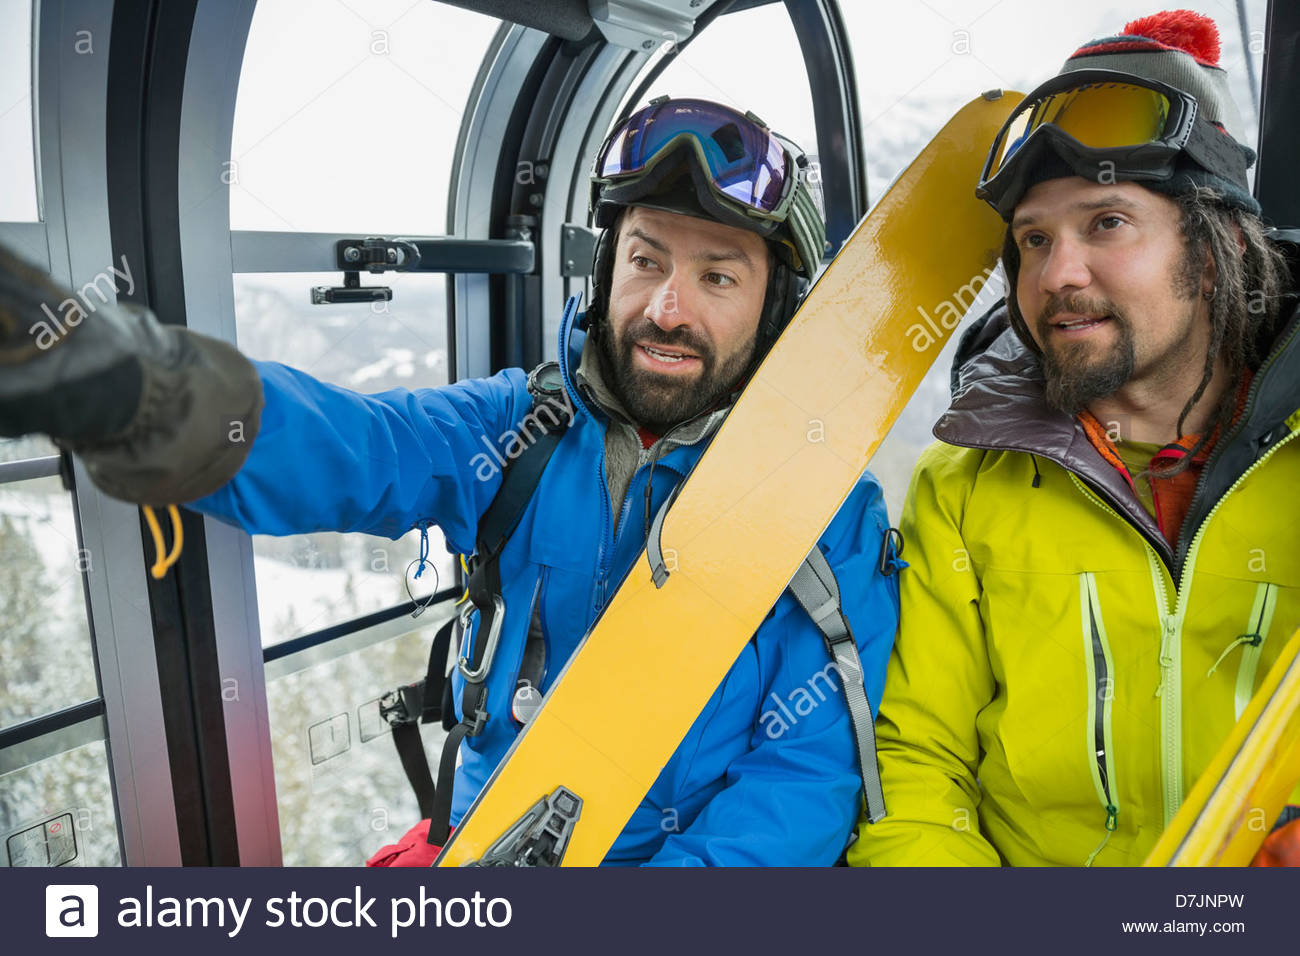 Male skiers talking in gondola in mountains Stock Photo